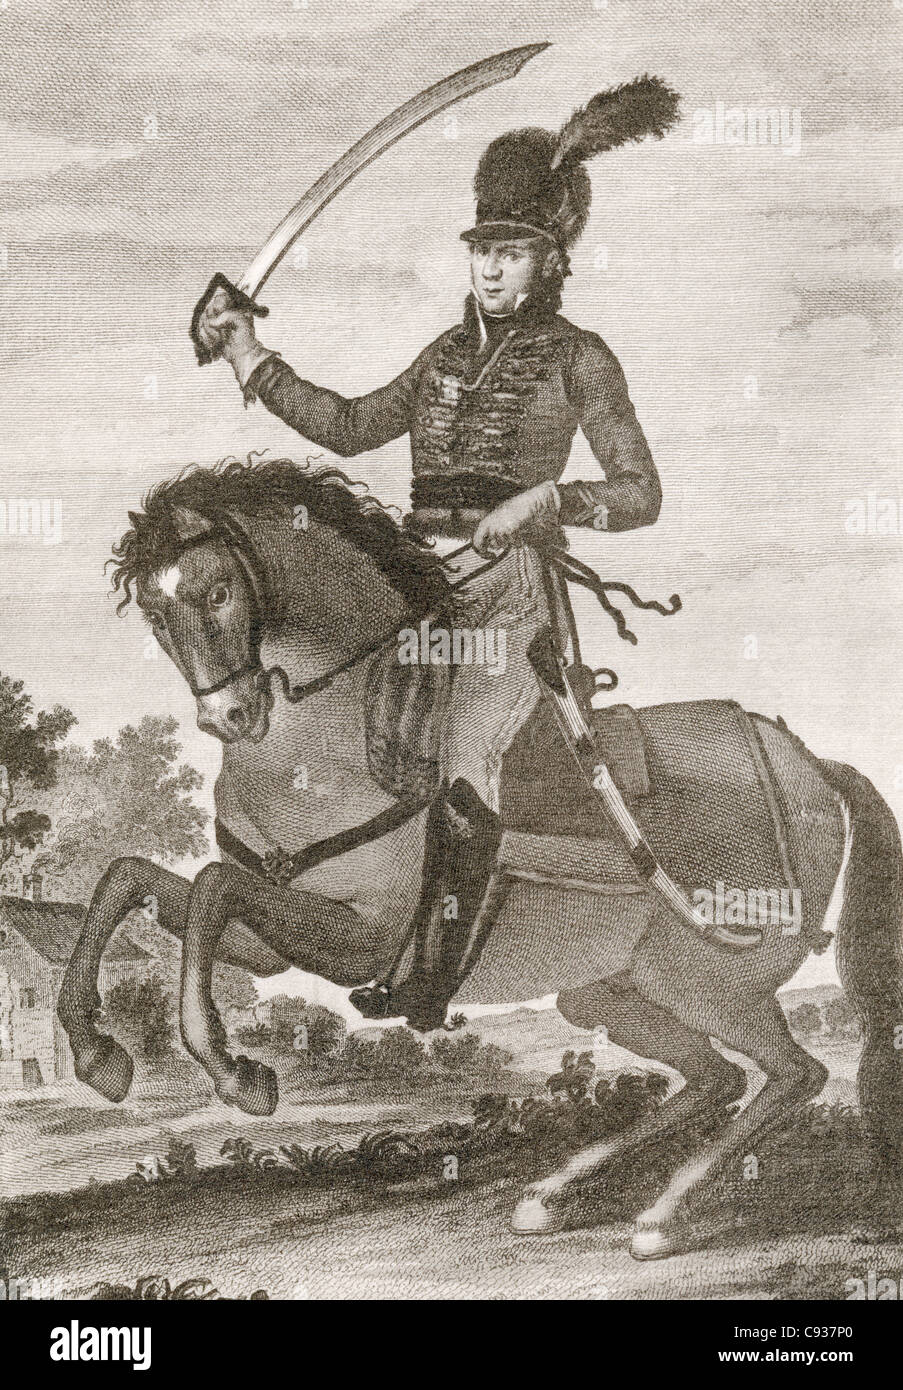 Francisco Espoz Ilundain aka Francisco Espoz y Mina, 1781 – 1836. Spanish guerrilla leader and general. Stock Photo